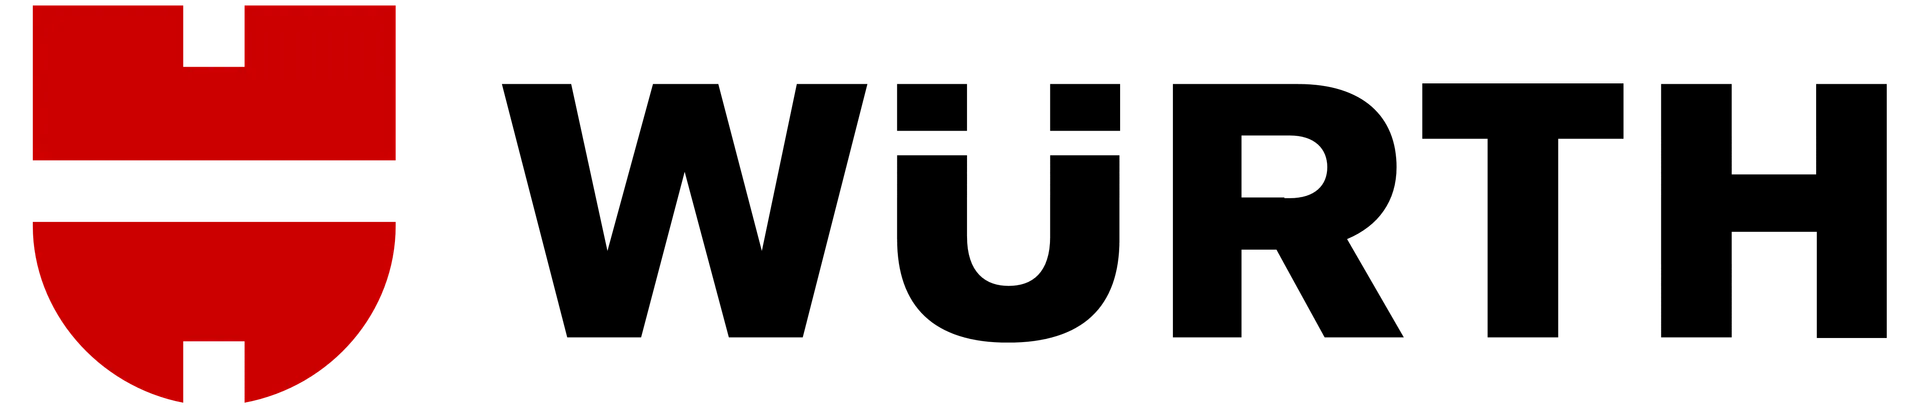 WÜRTH logo du catalogue